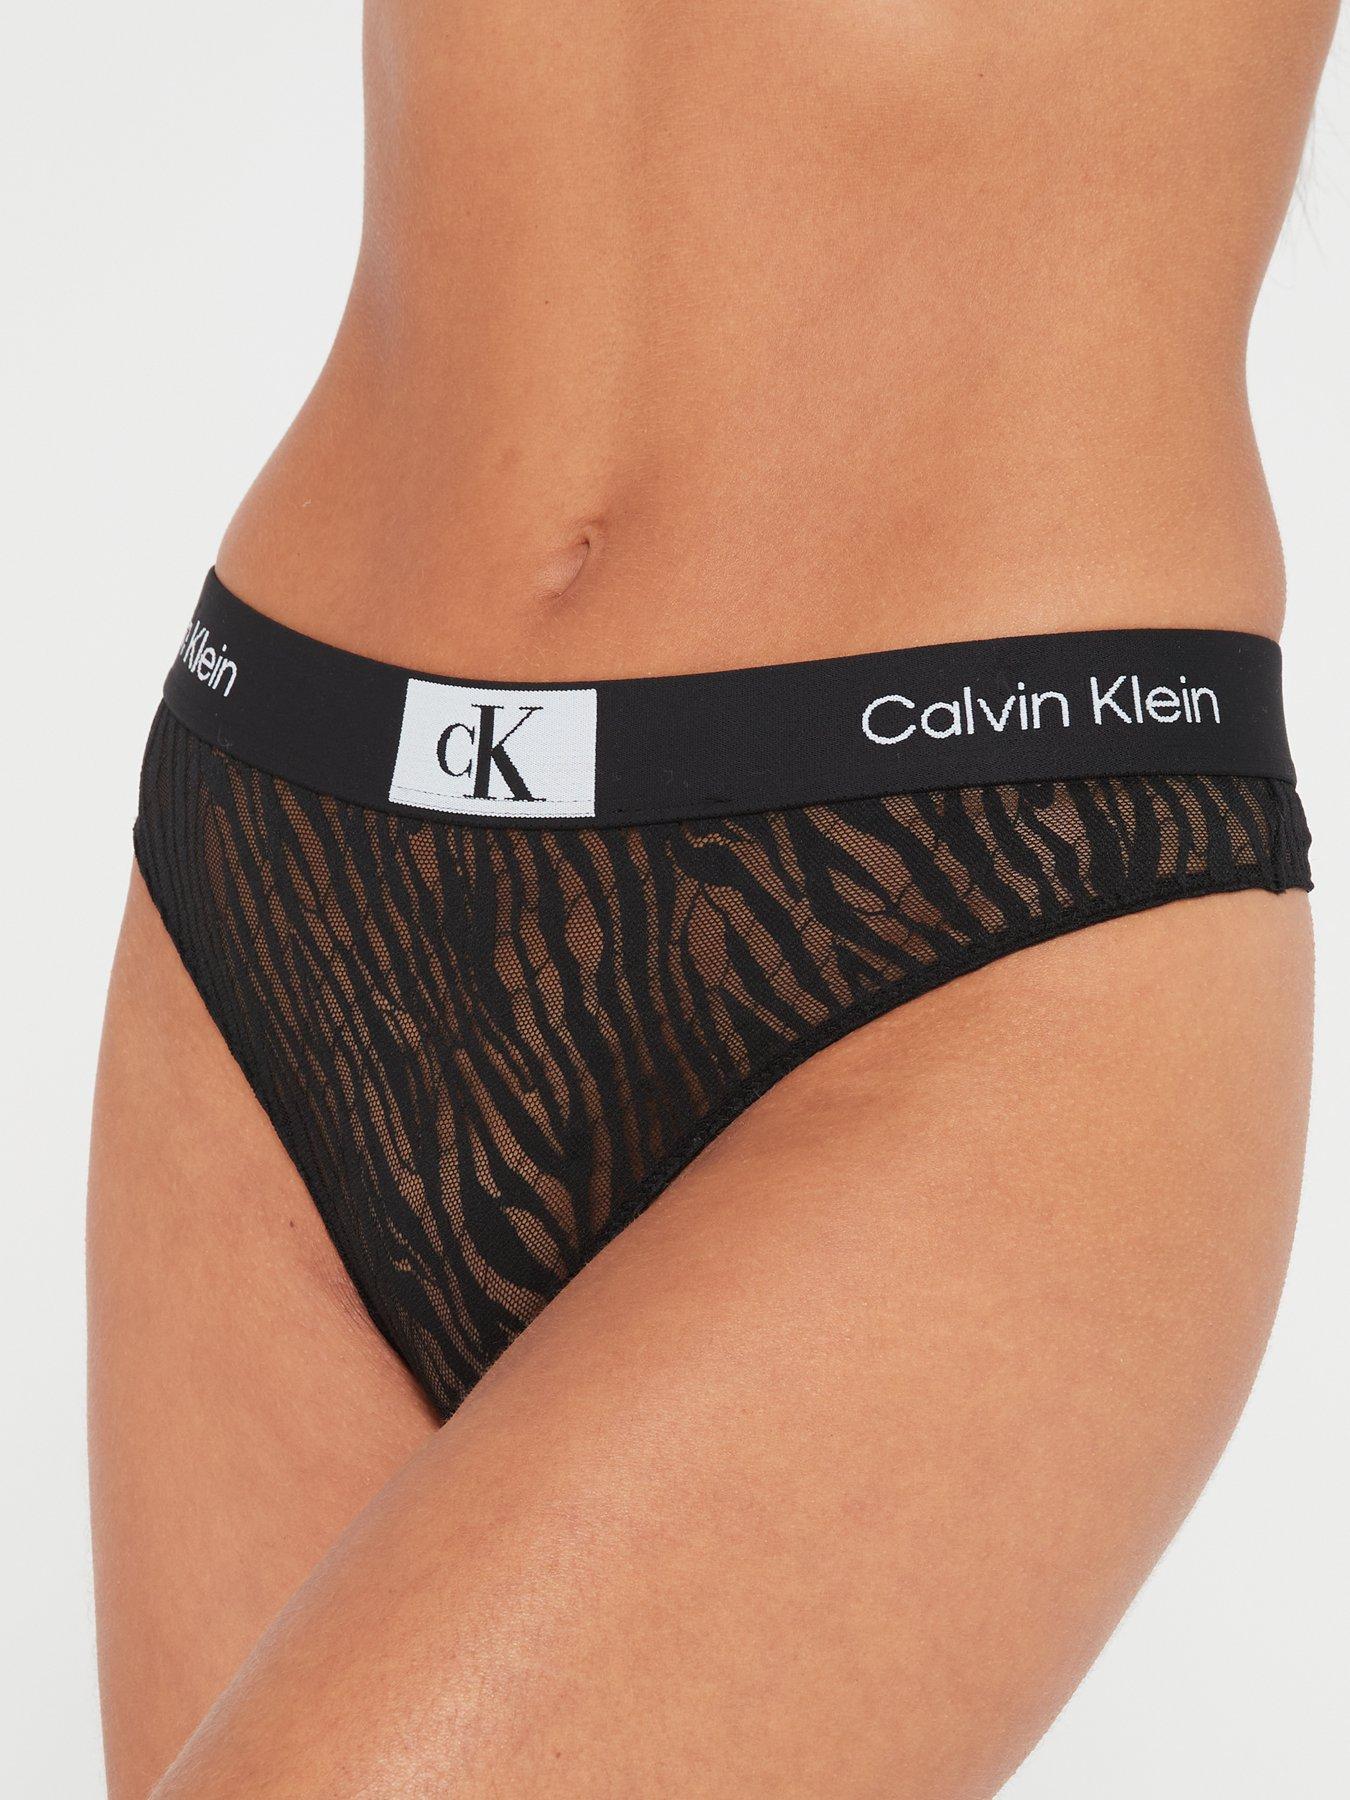 Calvin Klein CK 96 high waist thong in black animal lace